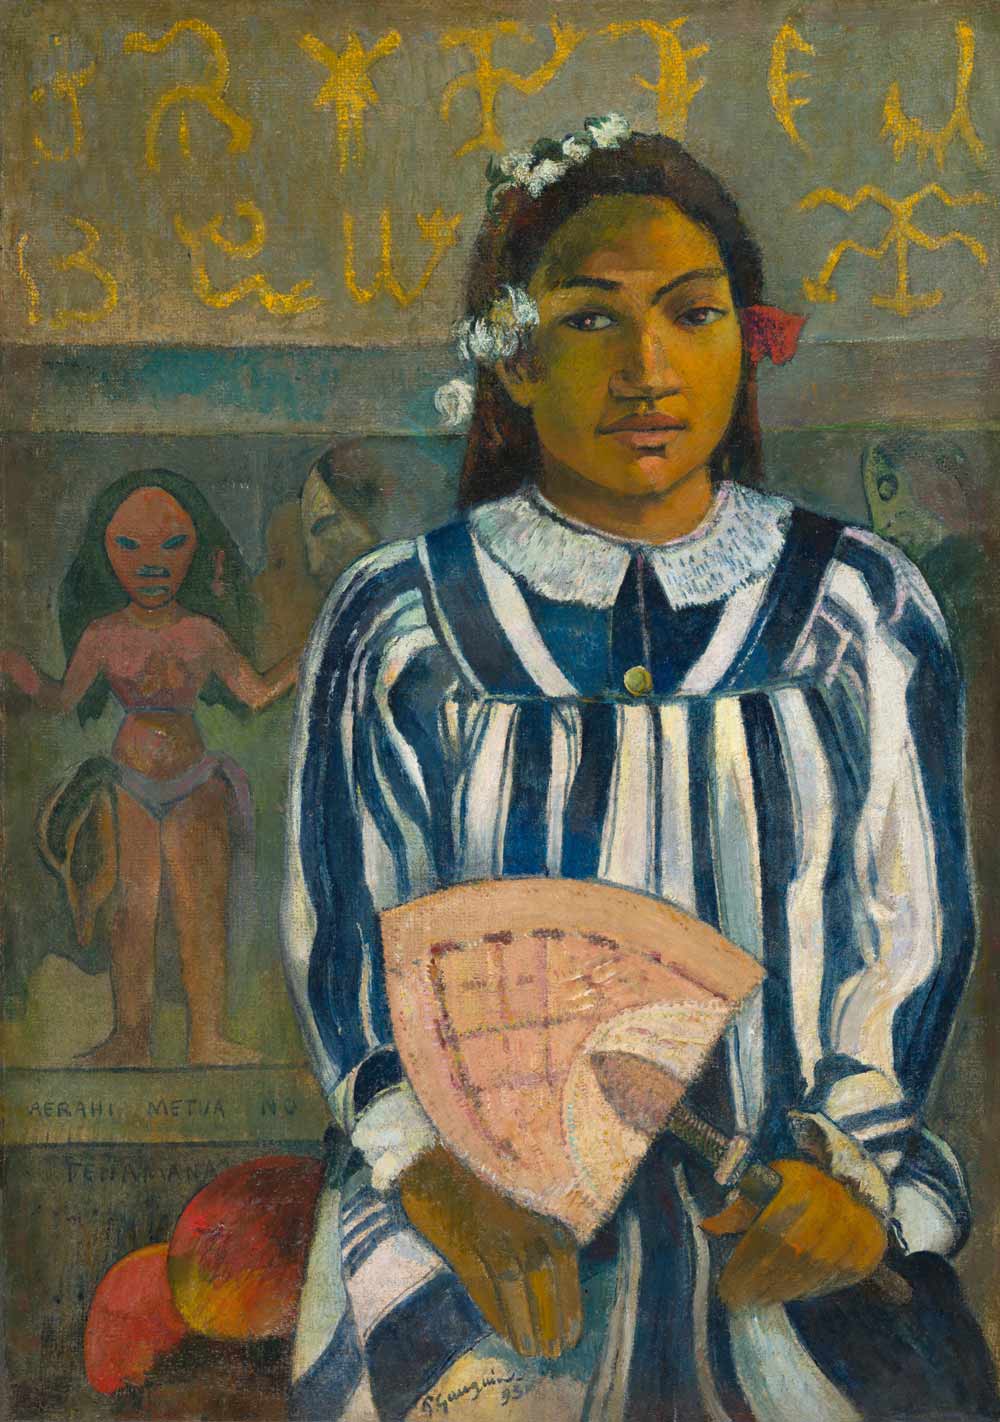 [K] Paul Gauguin - Merahi metua no Tehamana 1893